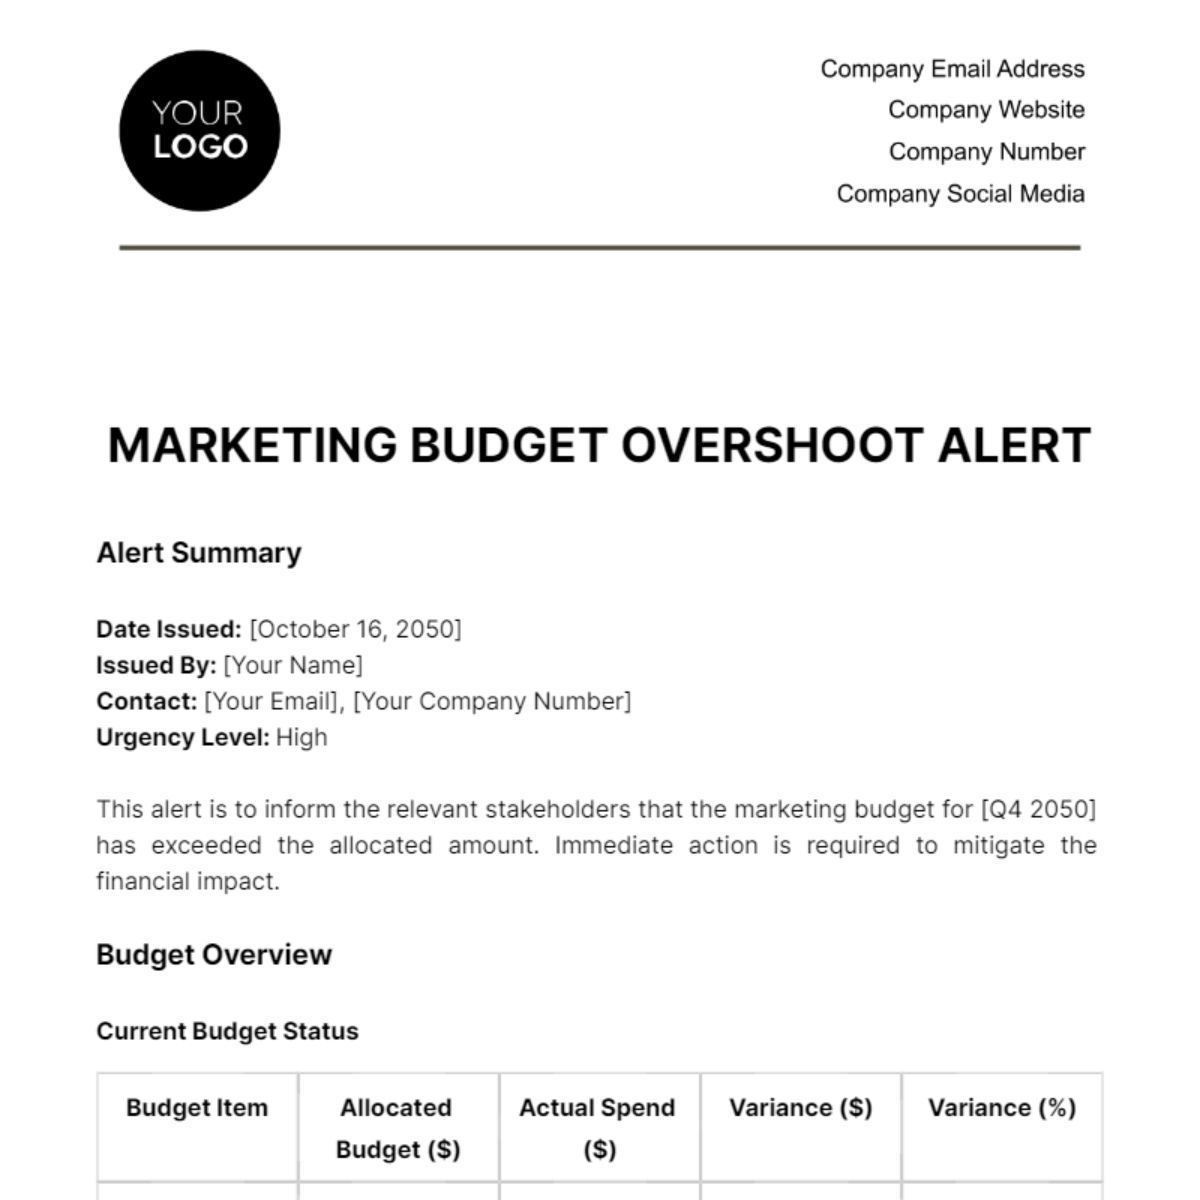 Marketing Budget Overshoot Alert Template